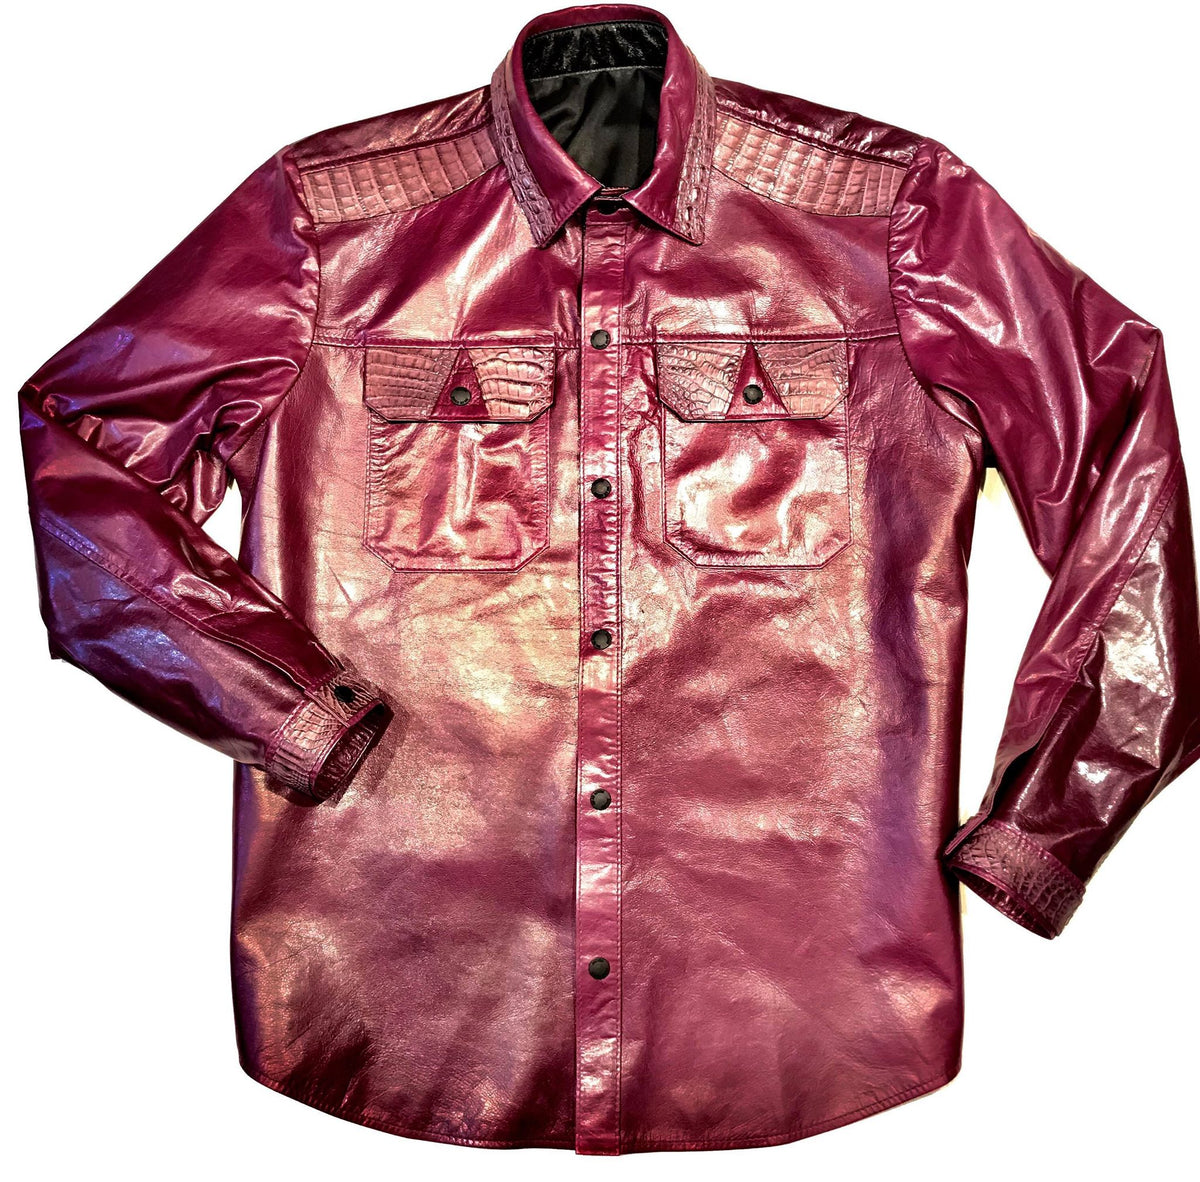 G Gator Jake Wood Leather Baseball Collar Jacket 1051 pelle pelle At The  Mister Shop Since 1948